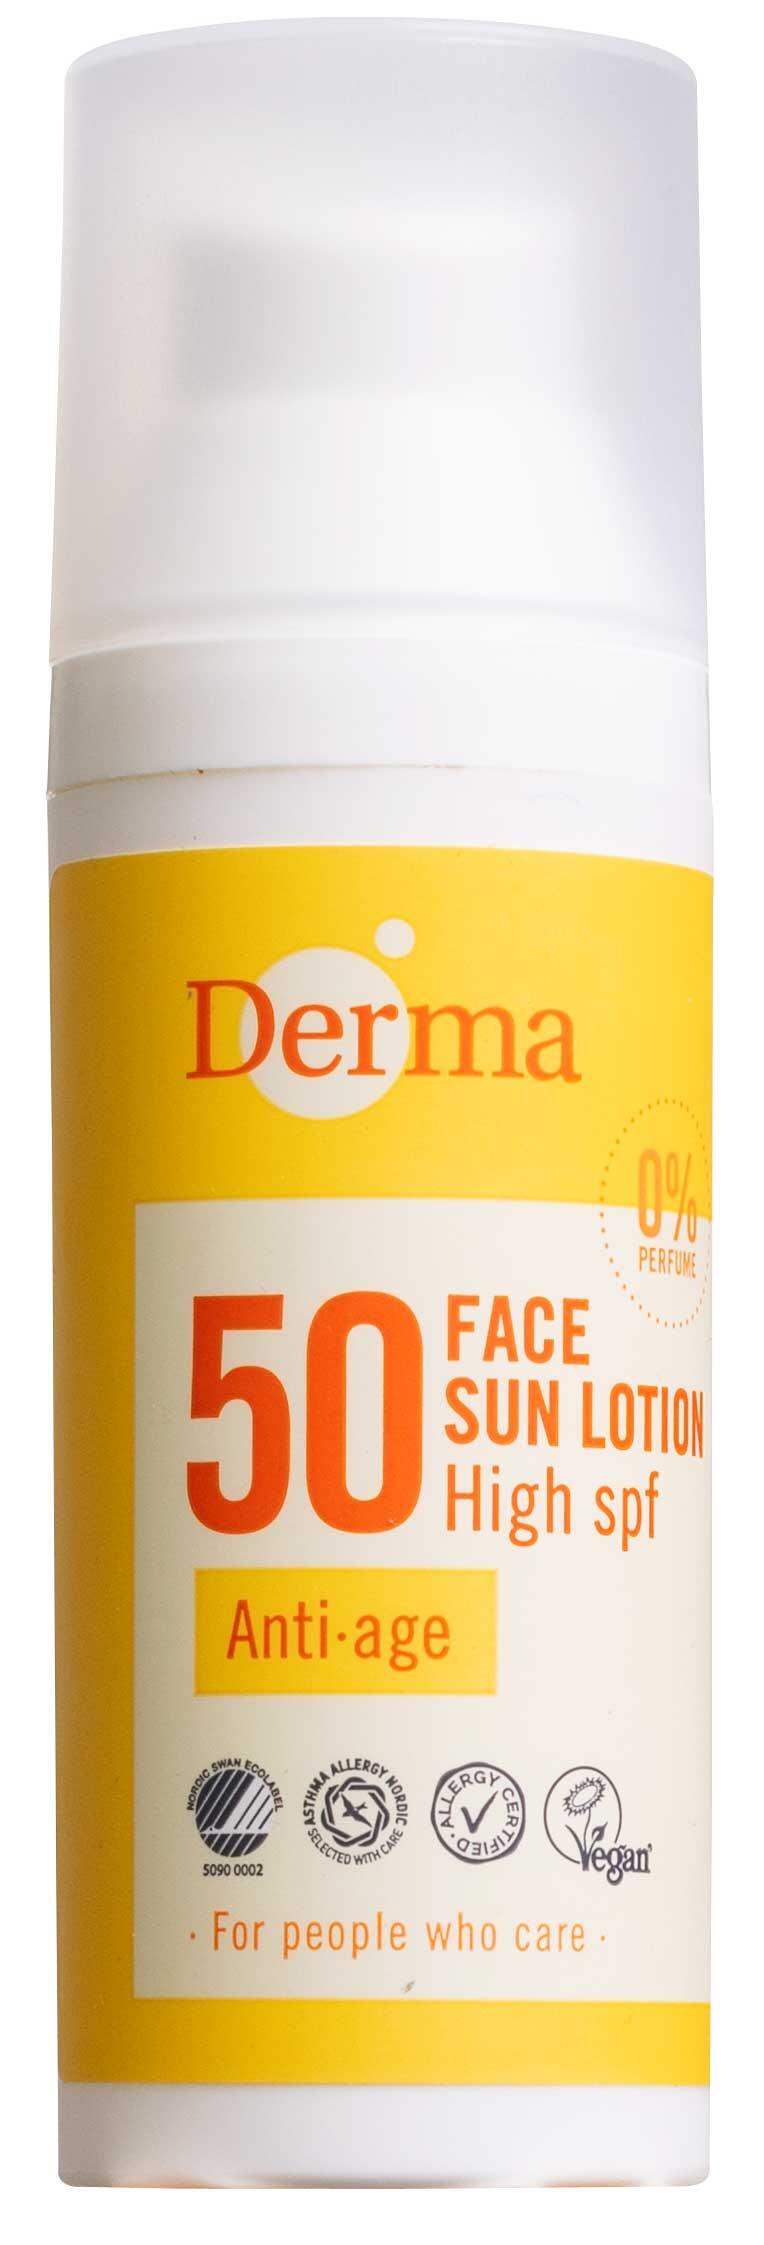 Face sun lotion SPF 50 Derma